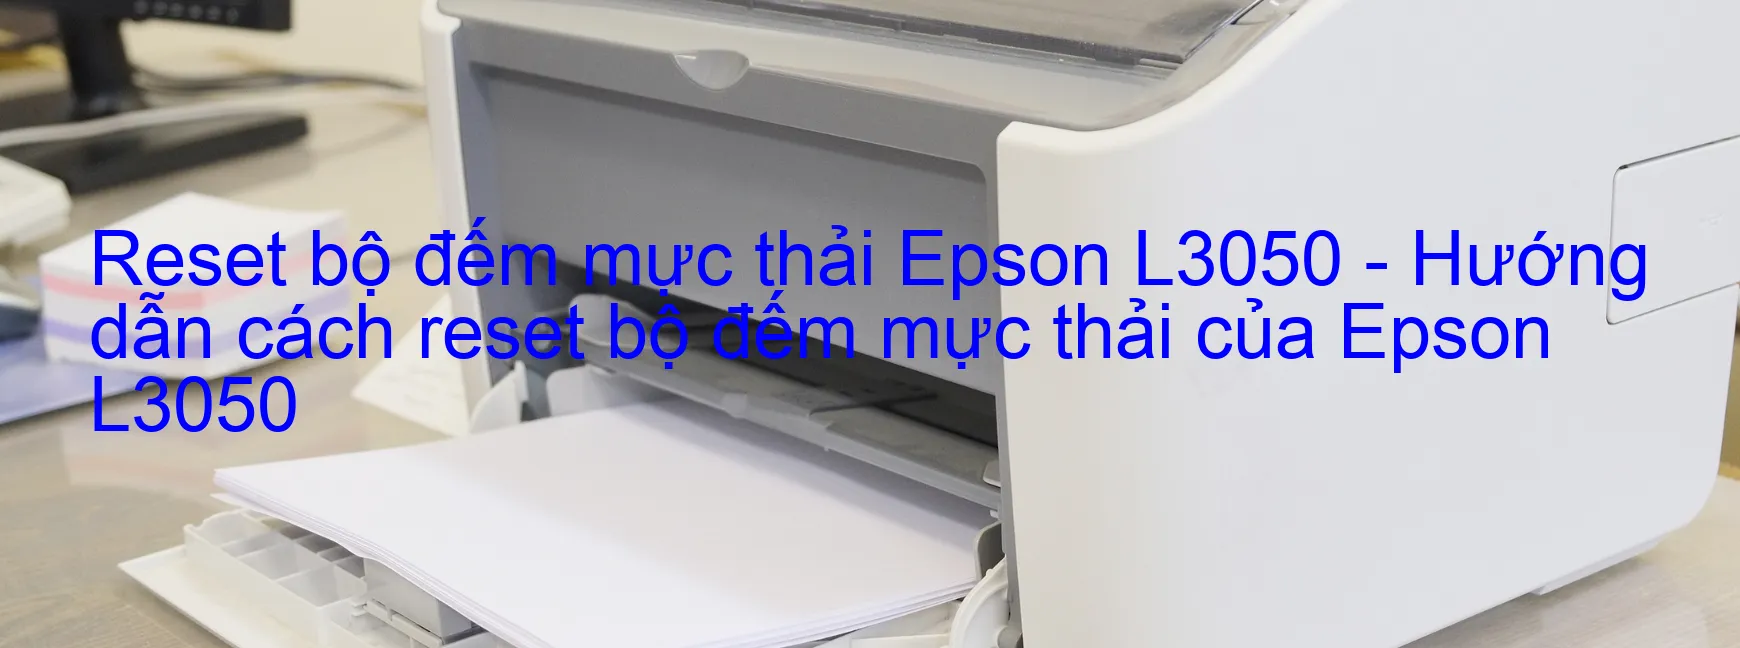 Reset bộ đếm mực thải Epson L3050 - Hướng dẫn cách reset bộ đếm mực thải của Epson L3050